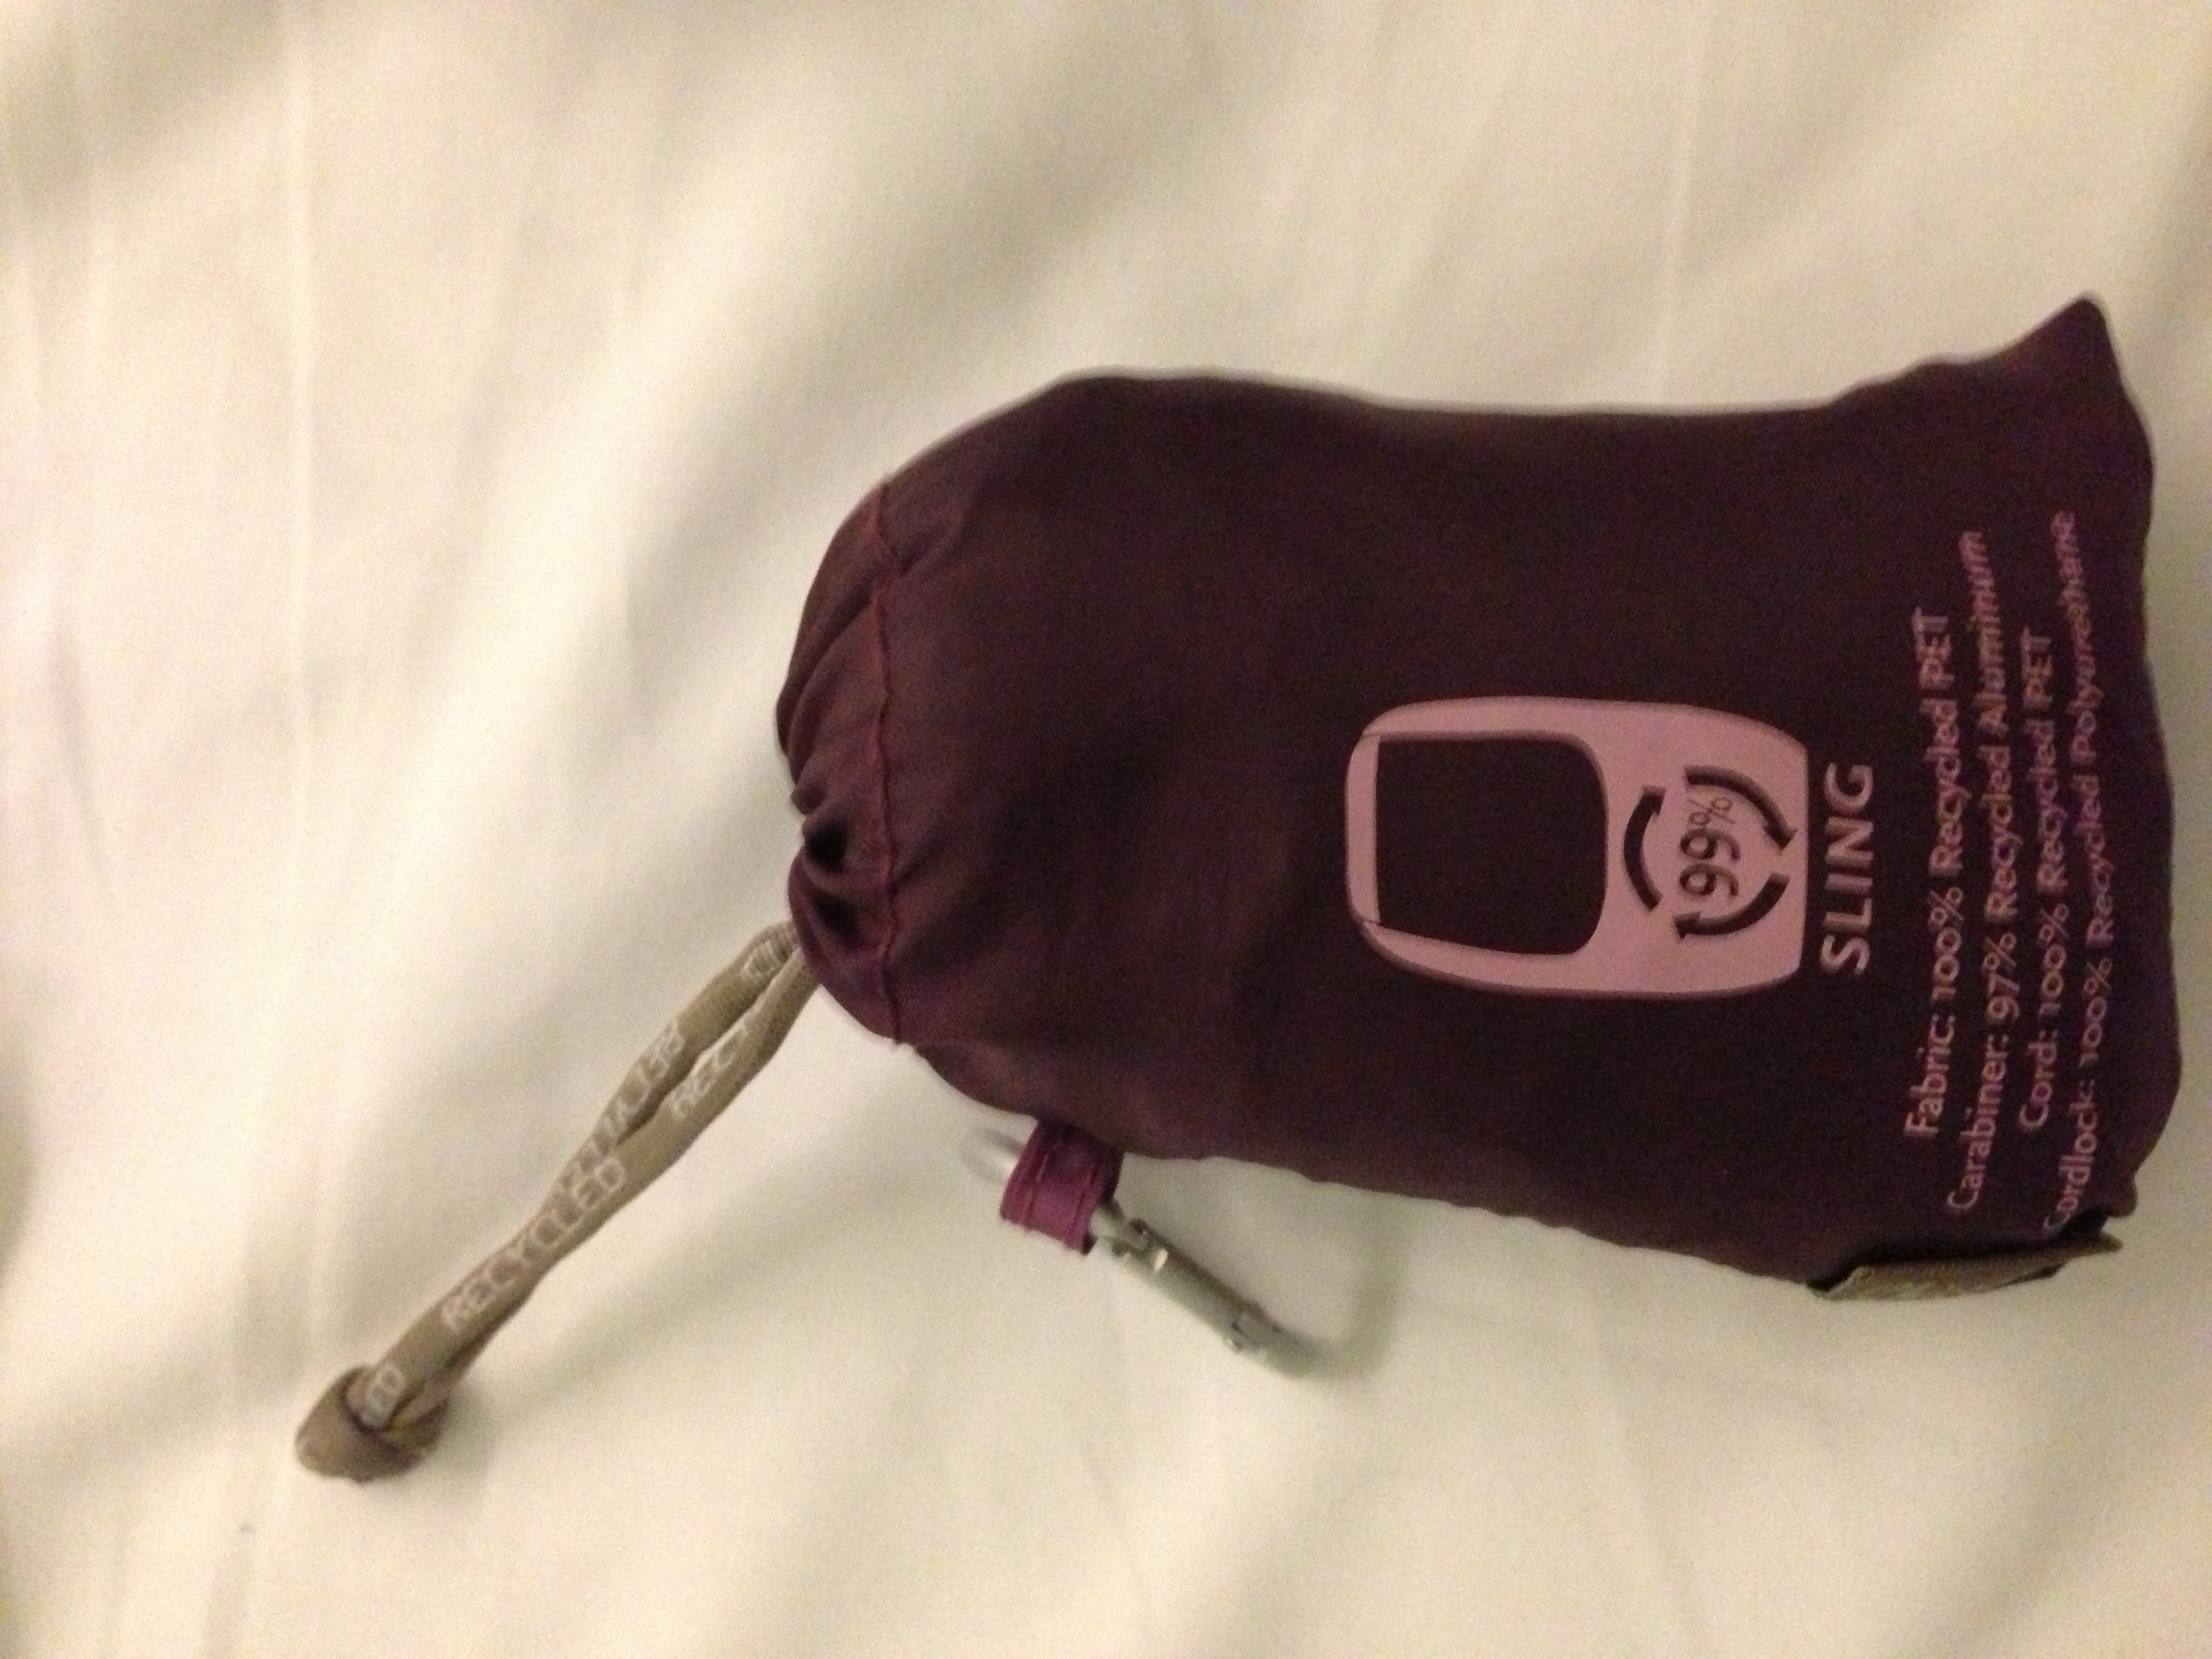 The sling - bundled up in it's built in pocket